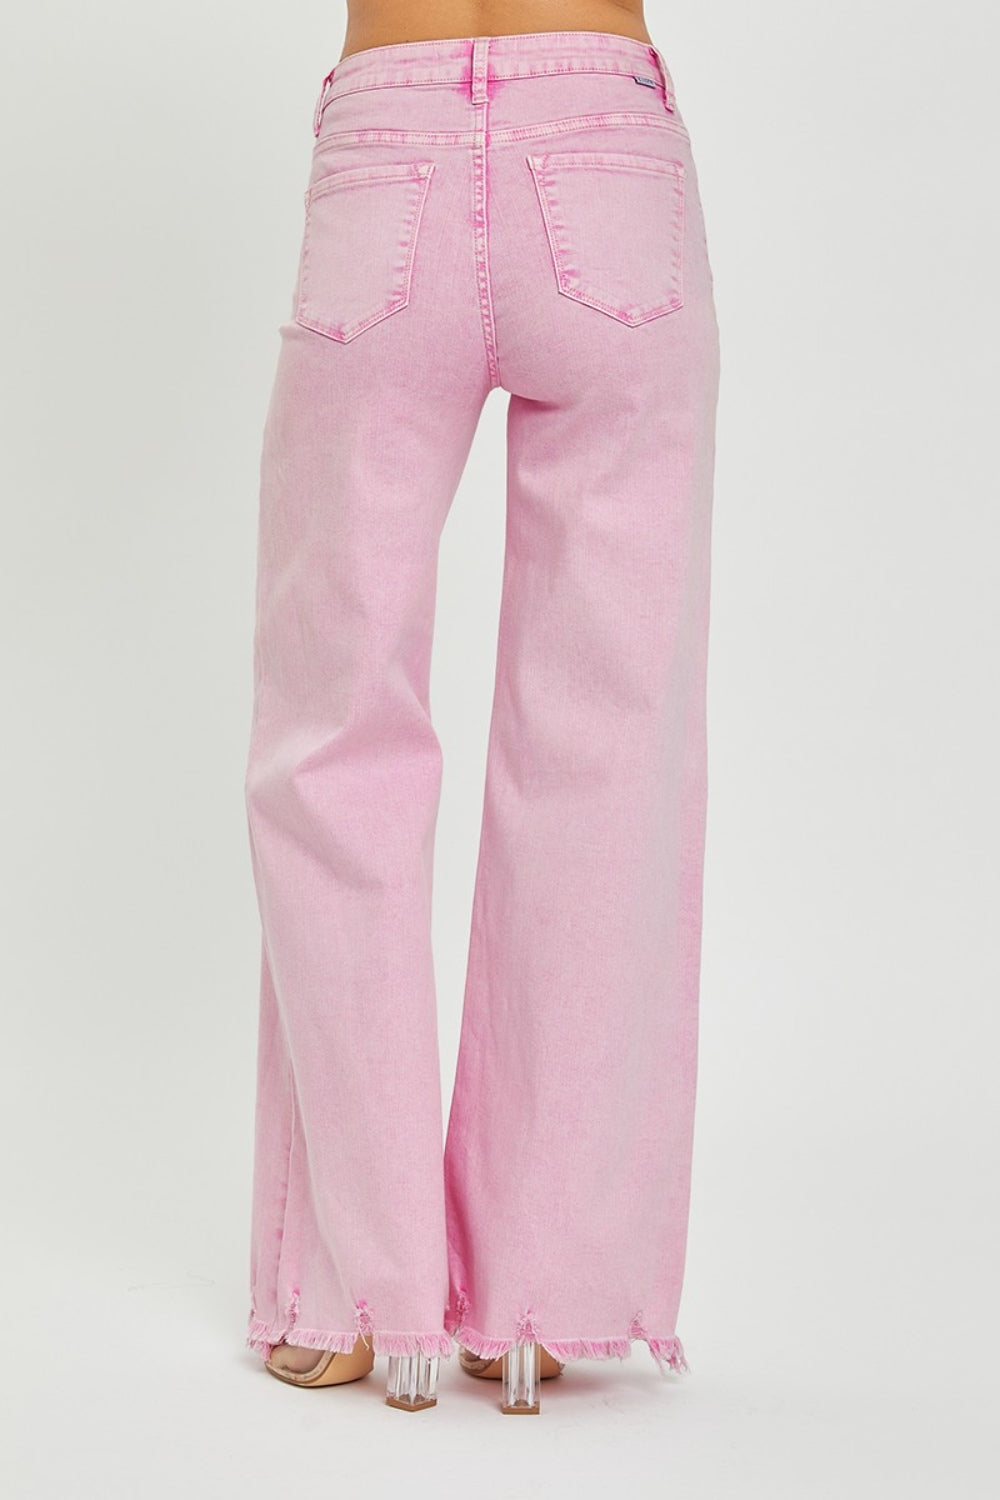 RISEN High Rise Wide Leg Jeans-Krush Kandy, Women's Online Fashion Boutique Located in Phoenix, Arizona (Scottsdale Area)